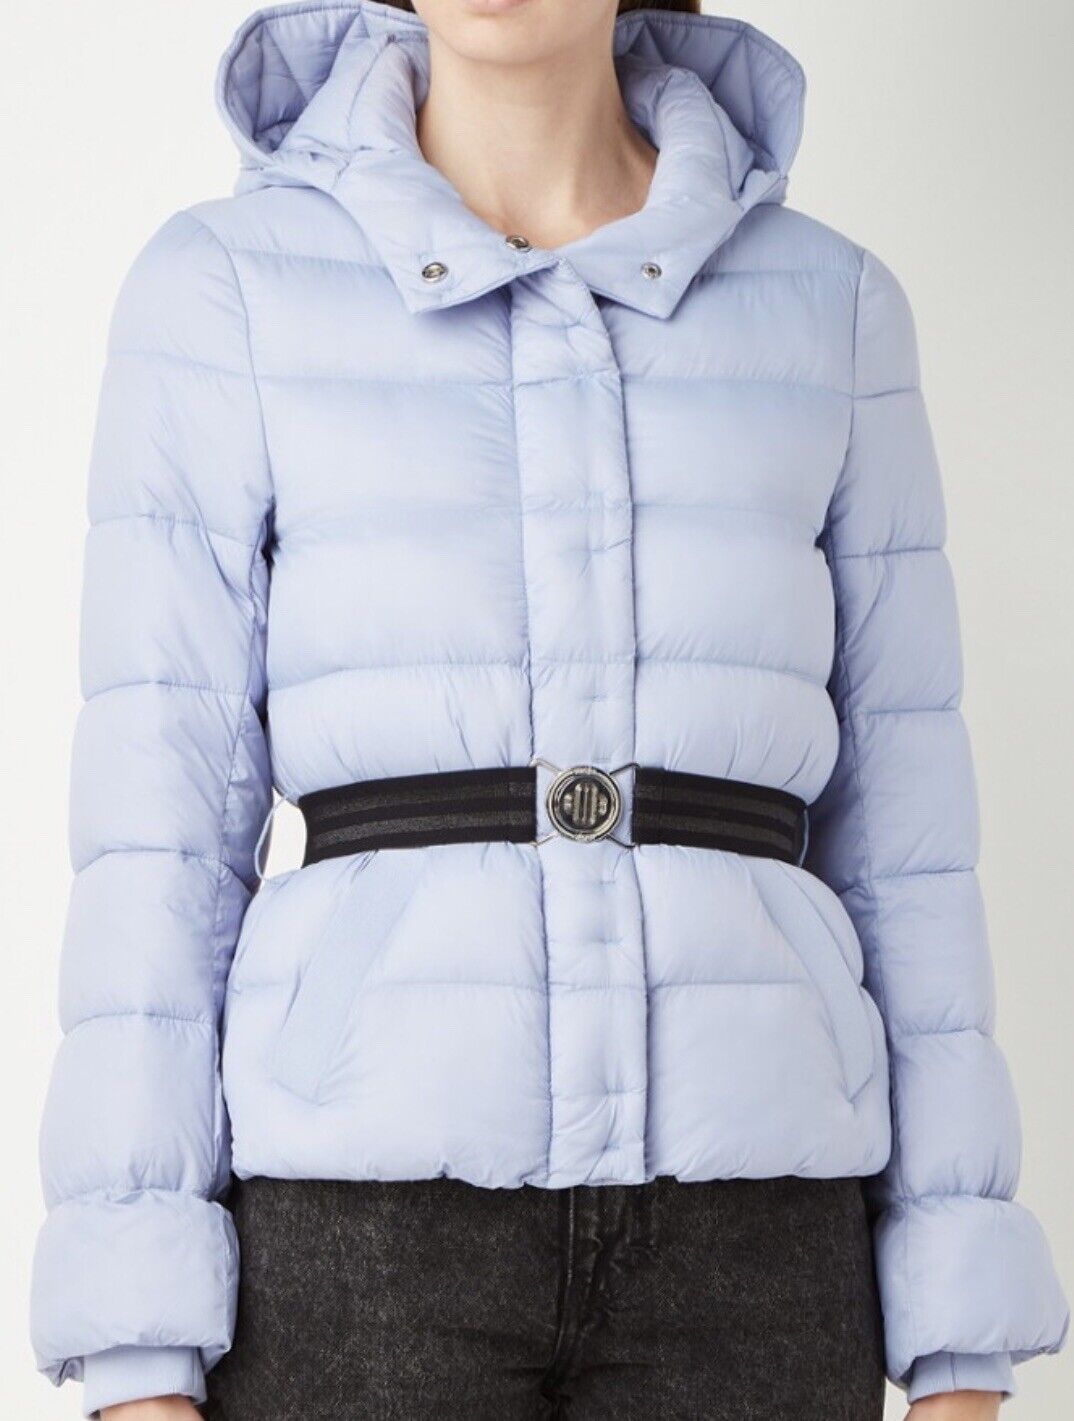 Maje Guygla Belted Polyfill Coat Bleu Ciel Jacket Size 36 $525 New | eBay